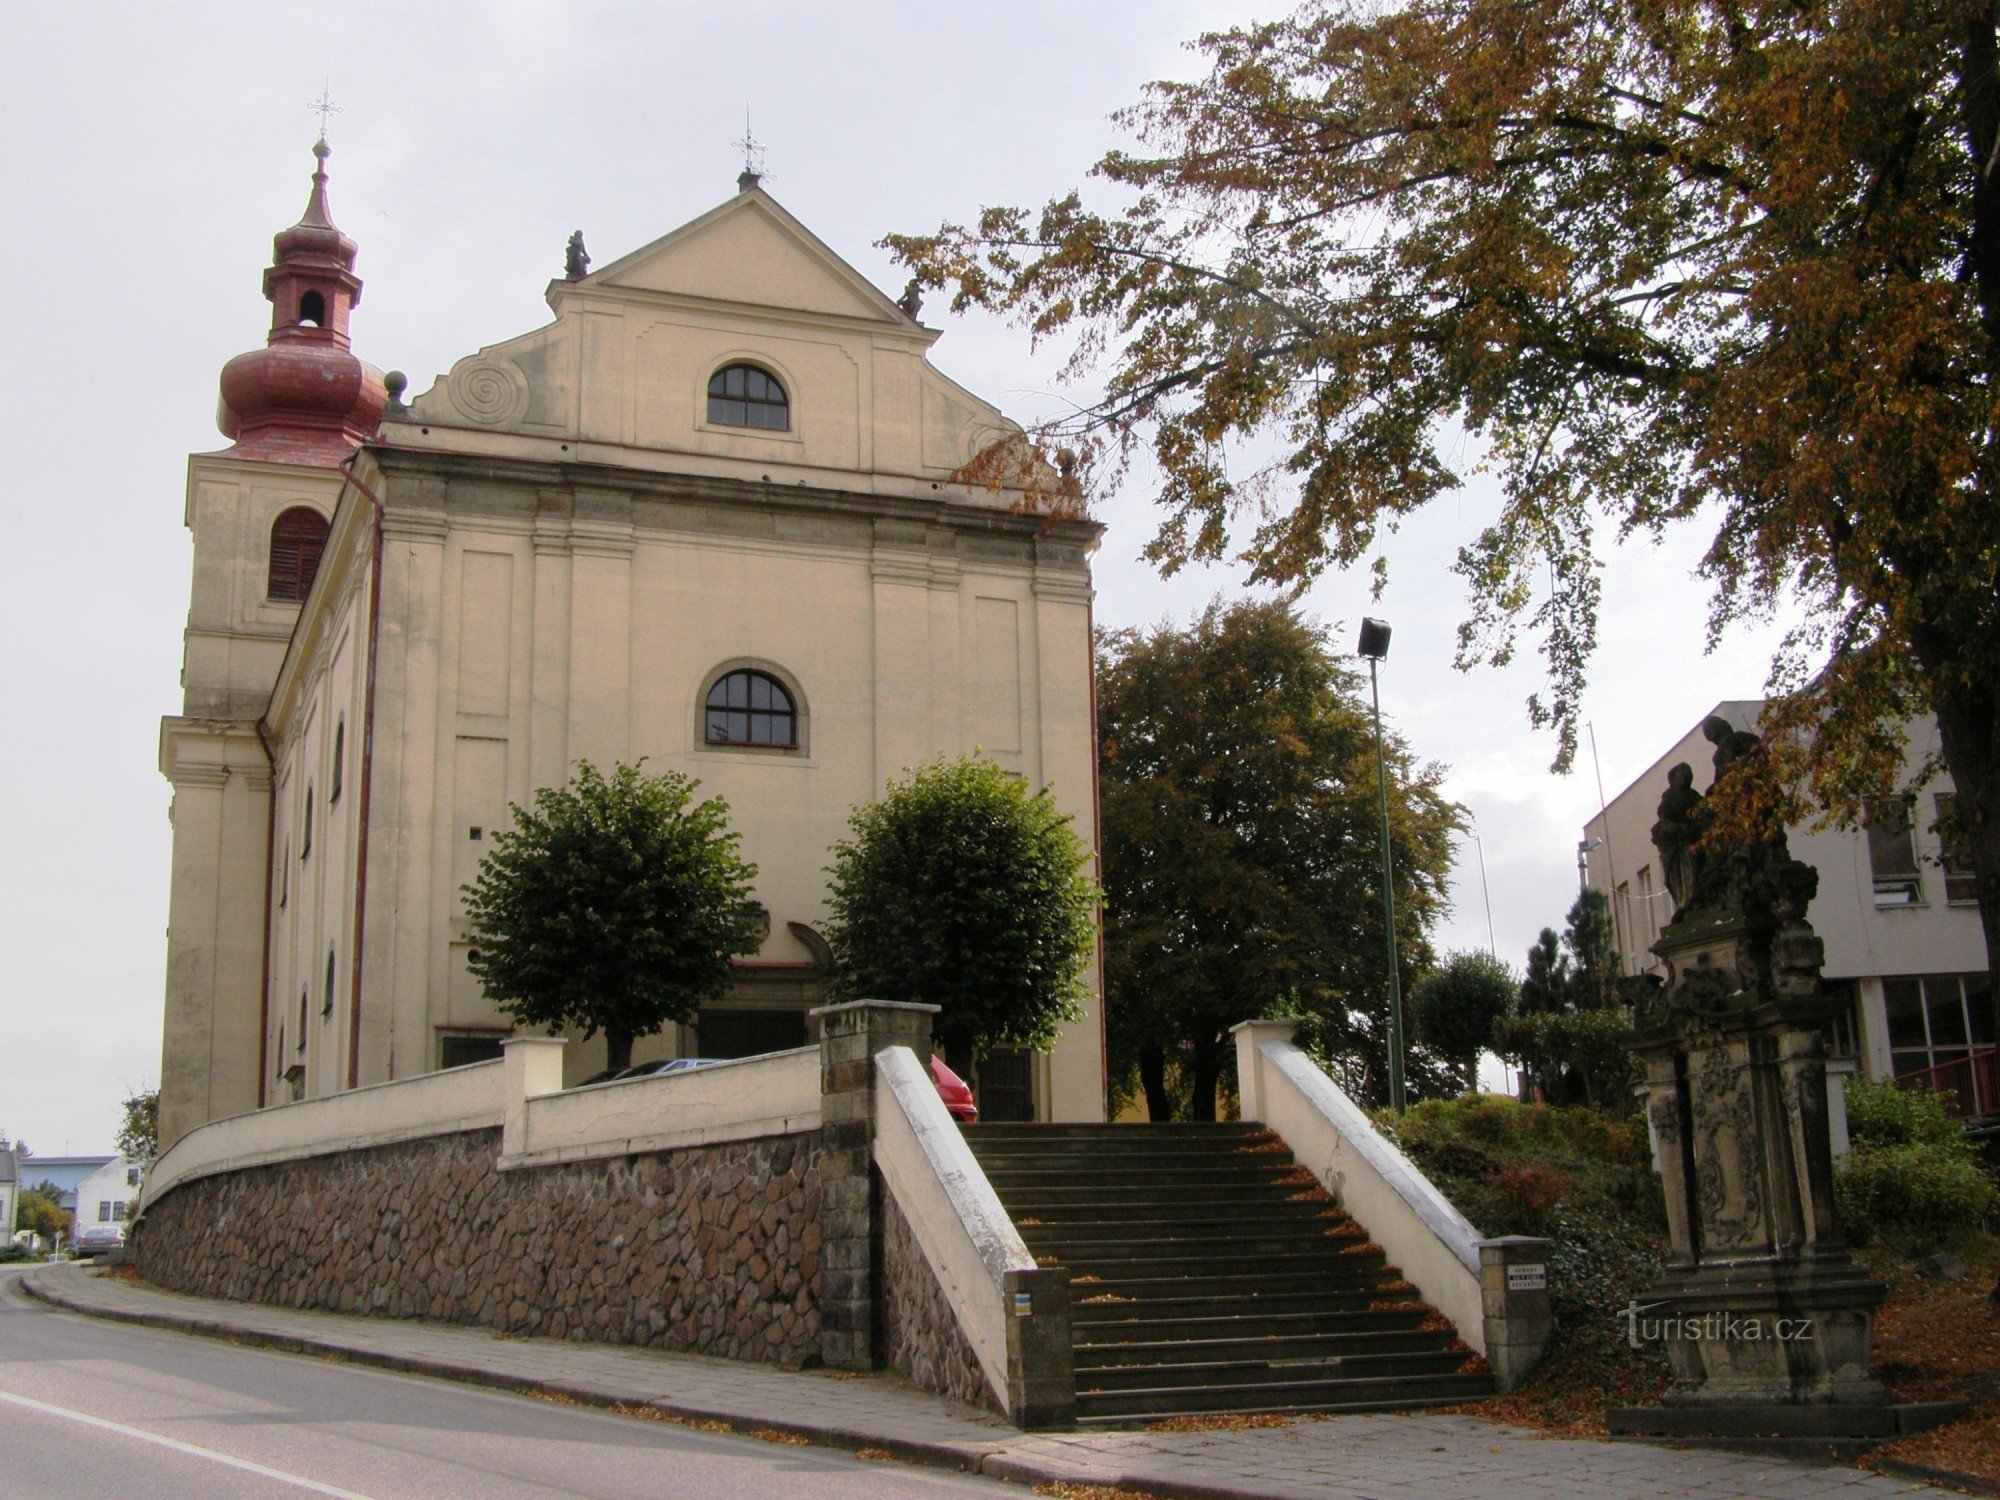 Vamberk - cerkev sv. Prokopij